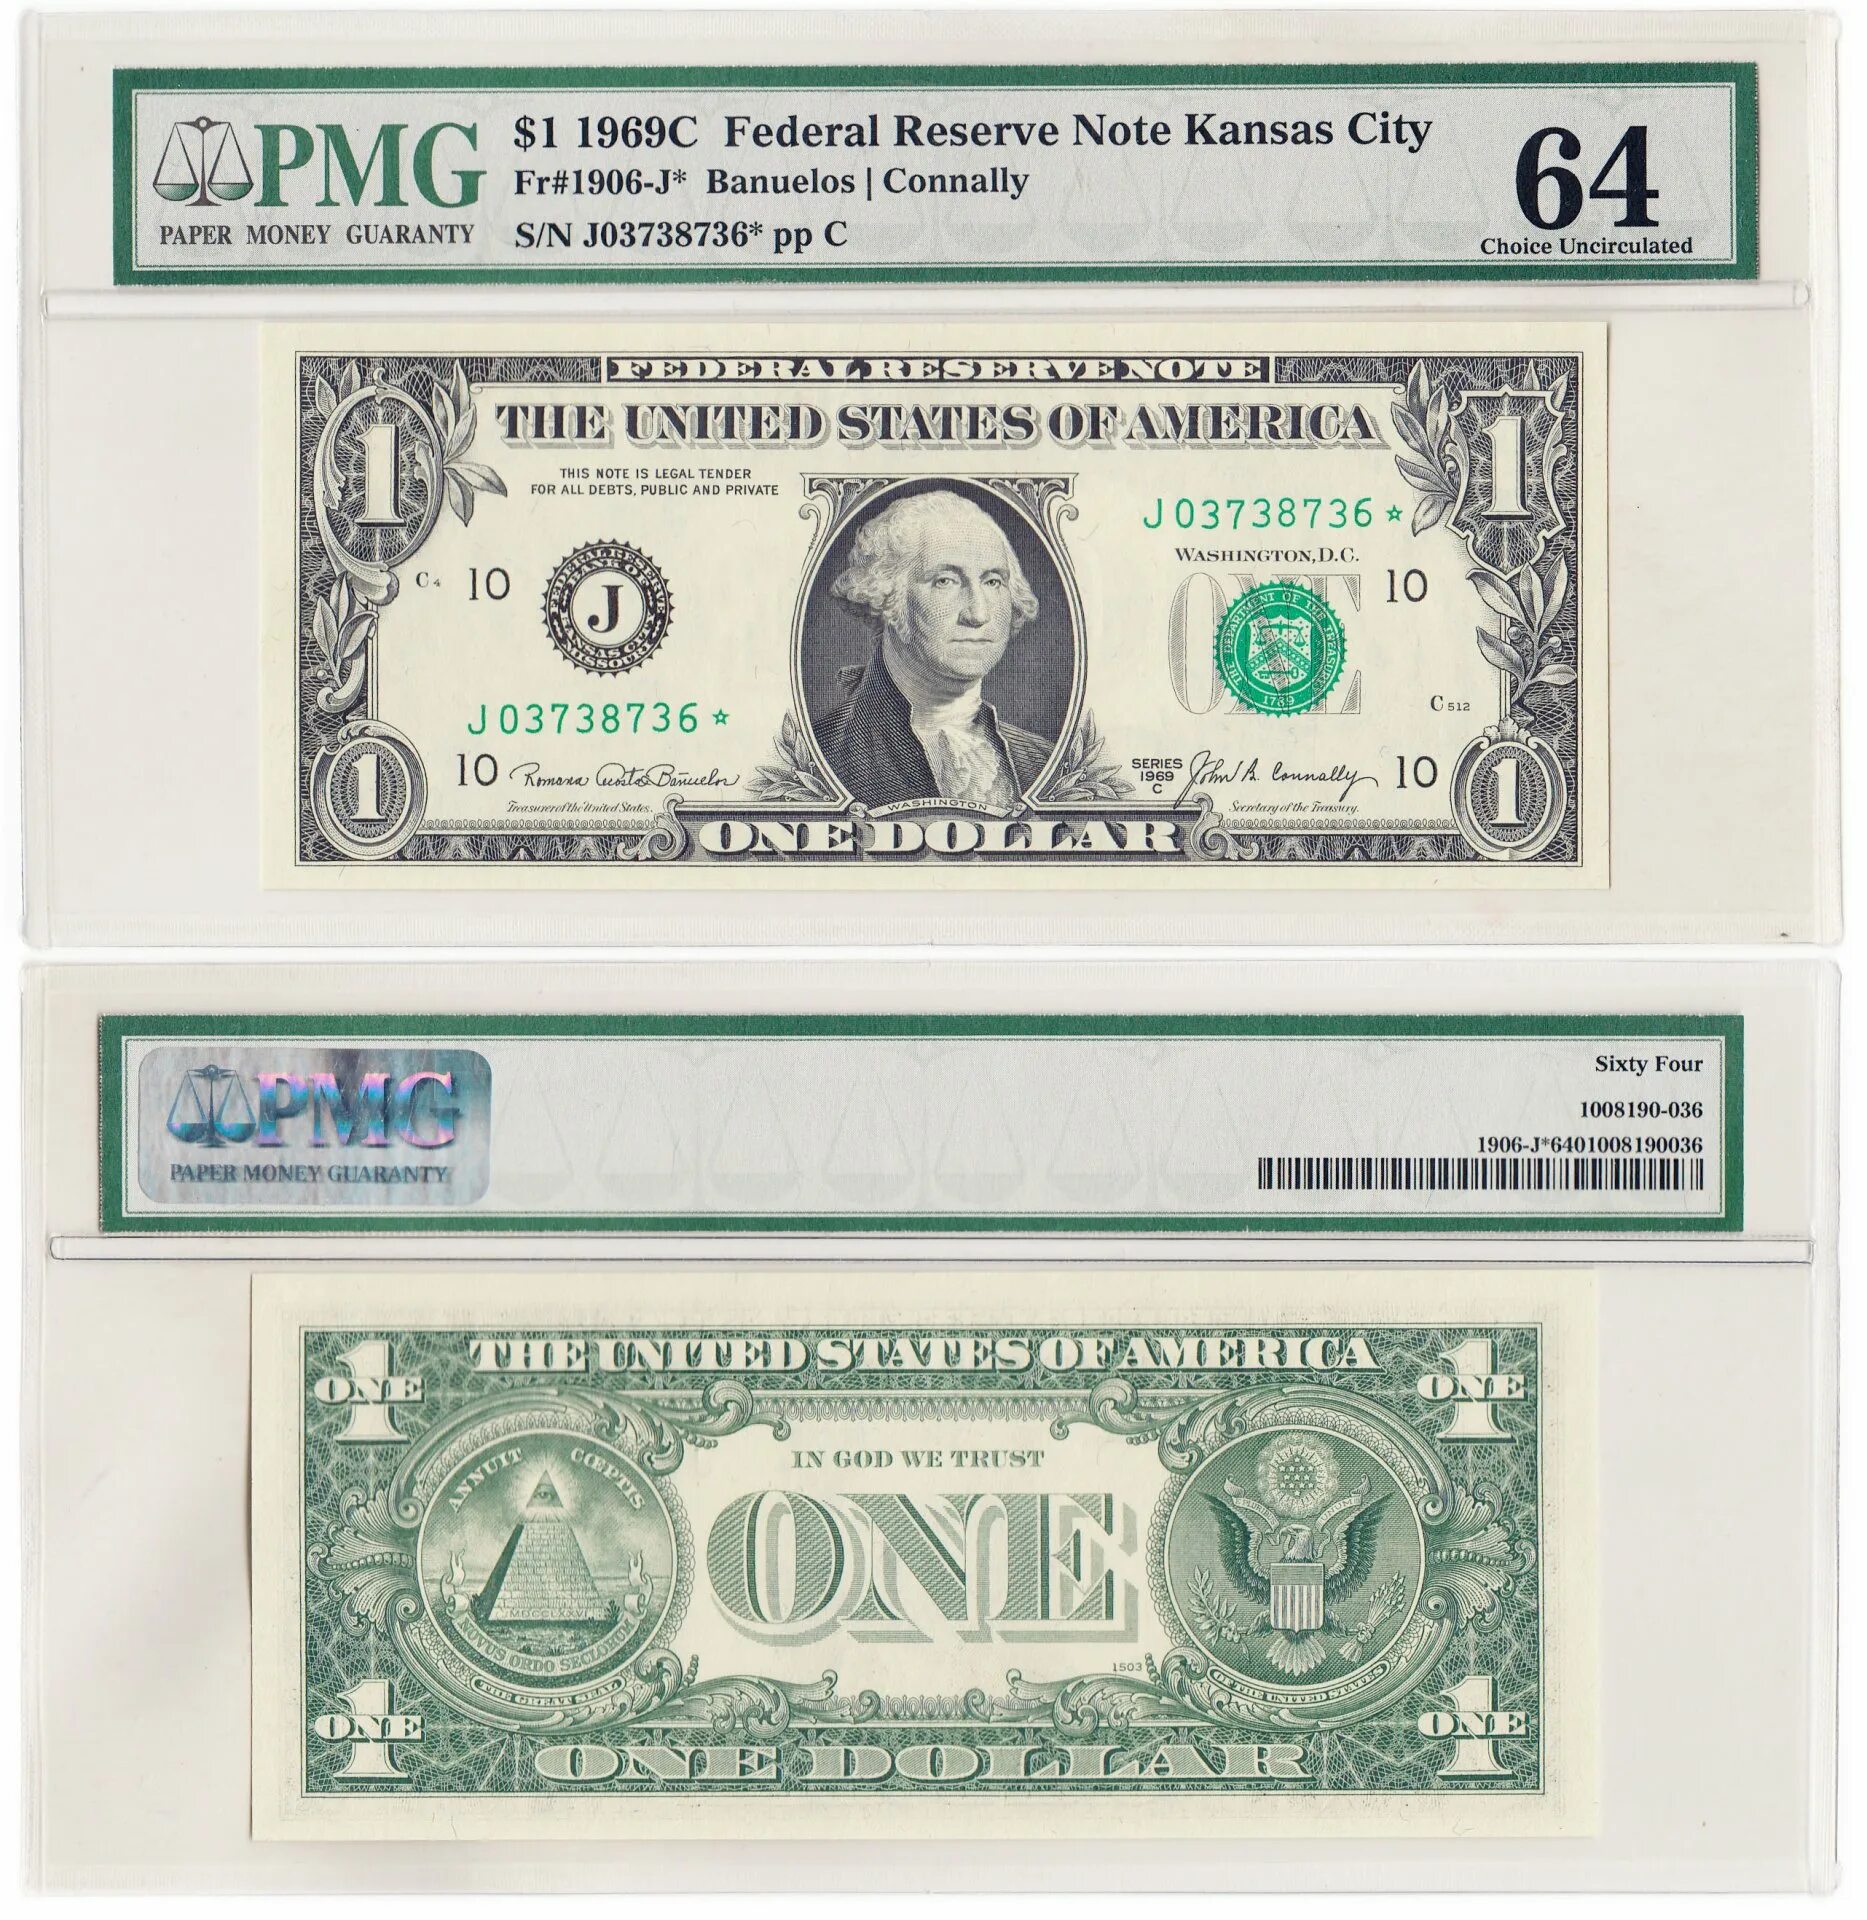 Купюры доллара старого образца. Банкнота 1 доллар. Купюра 1 доллар США. Старые банкноты США. Старые купюры долларов.